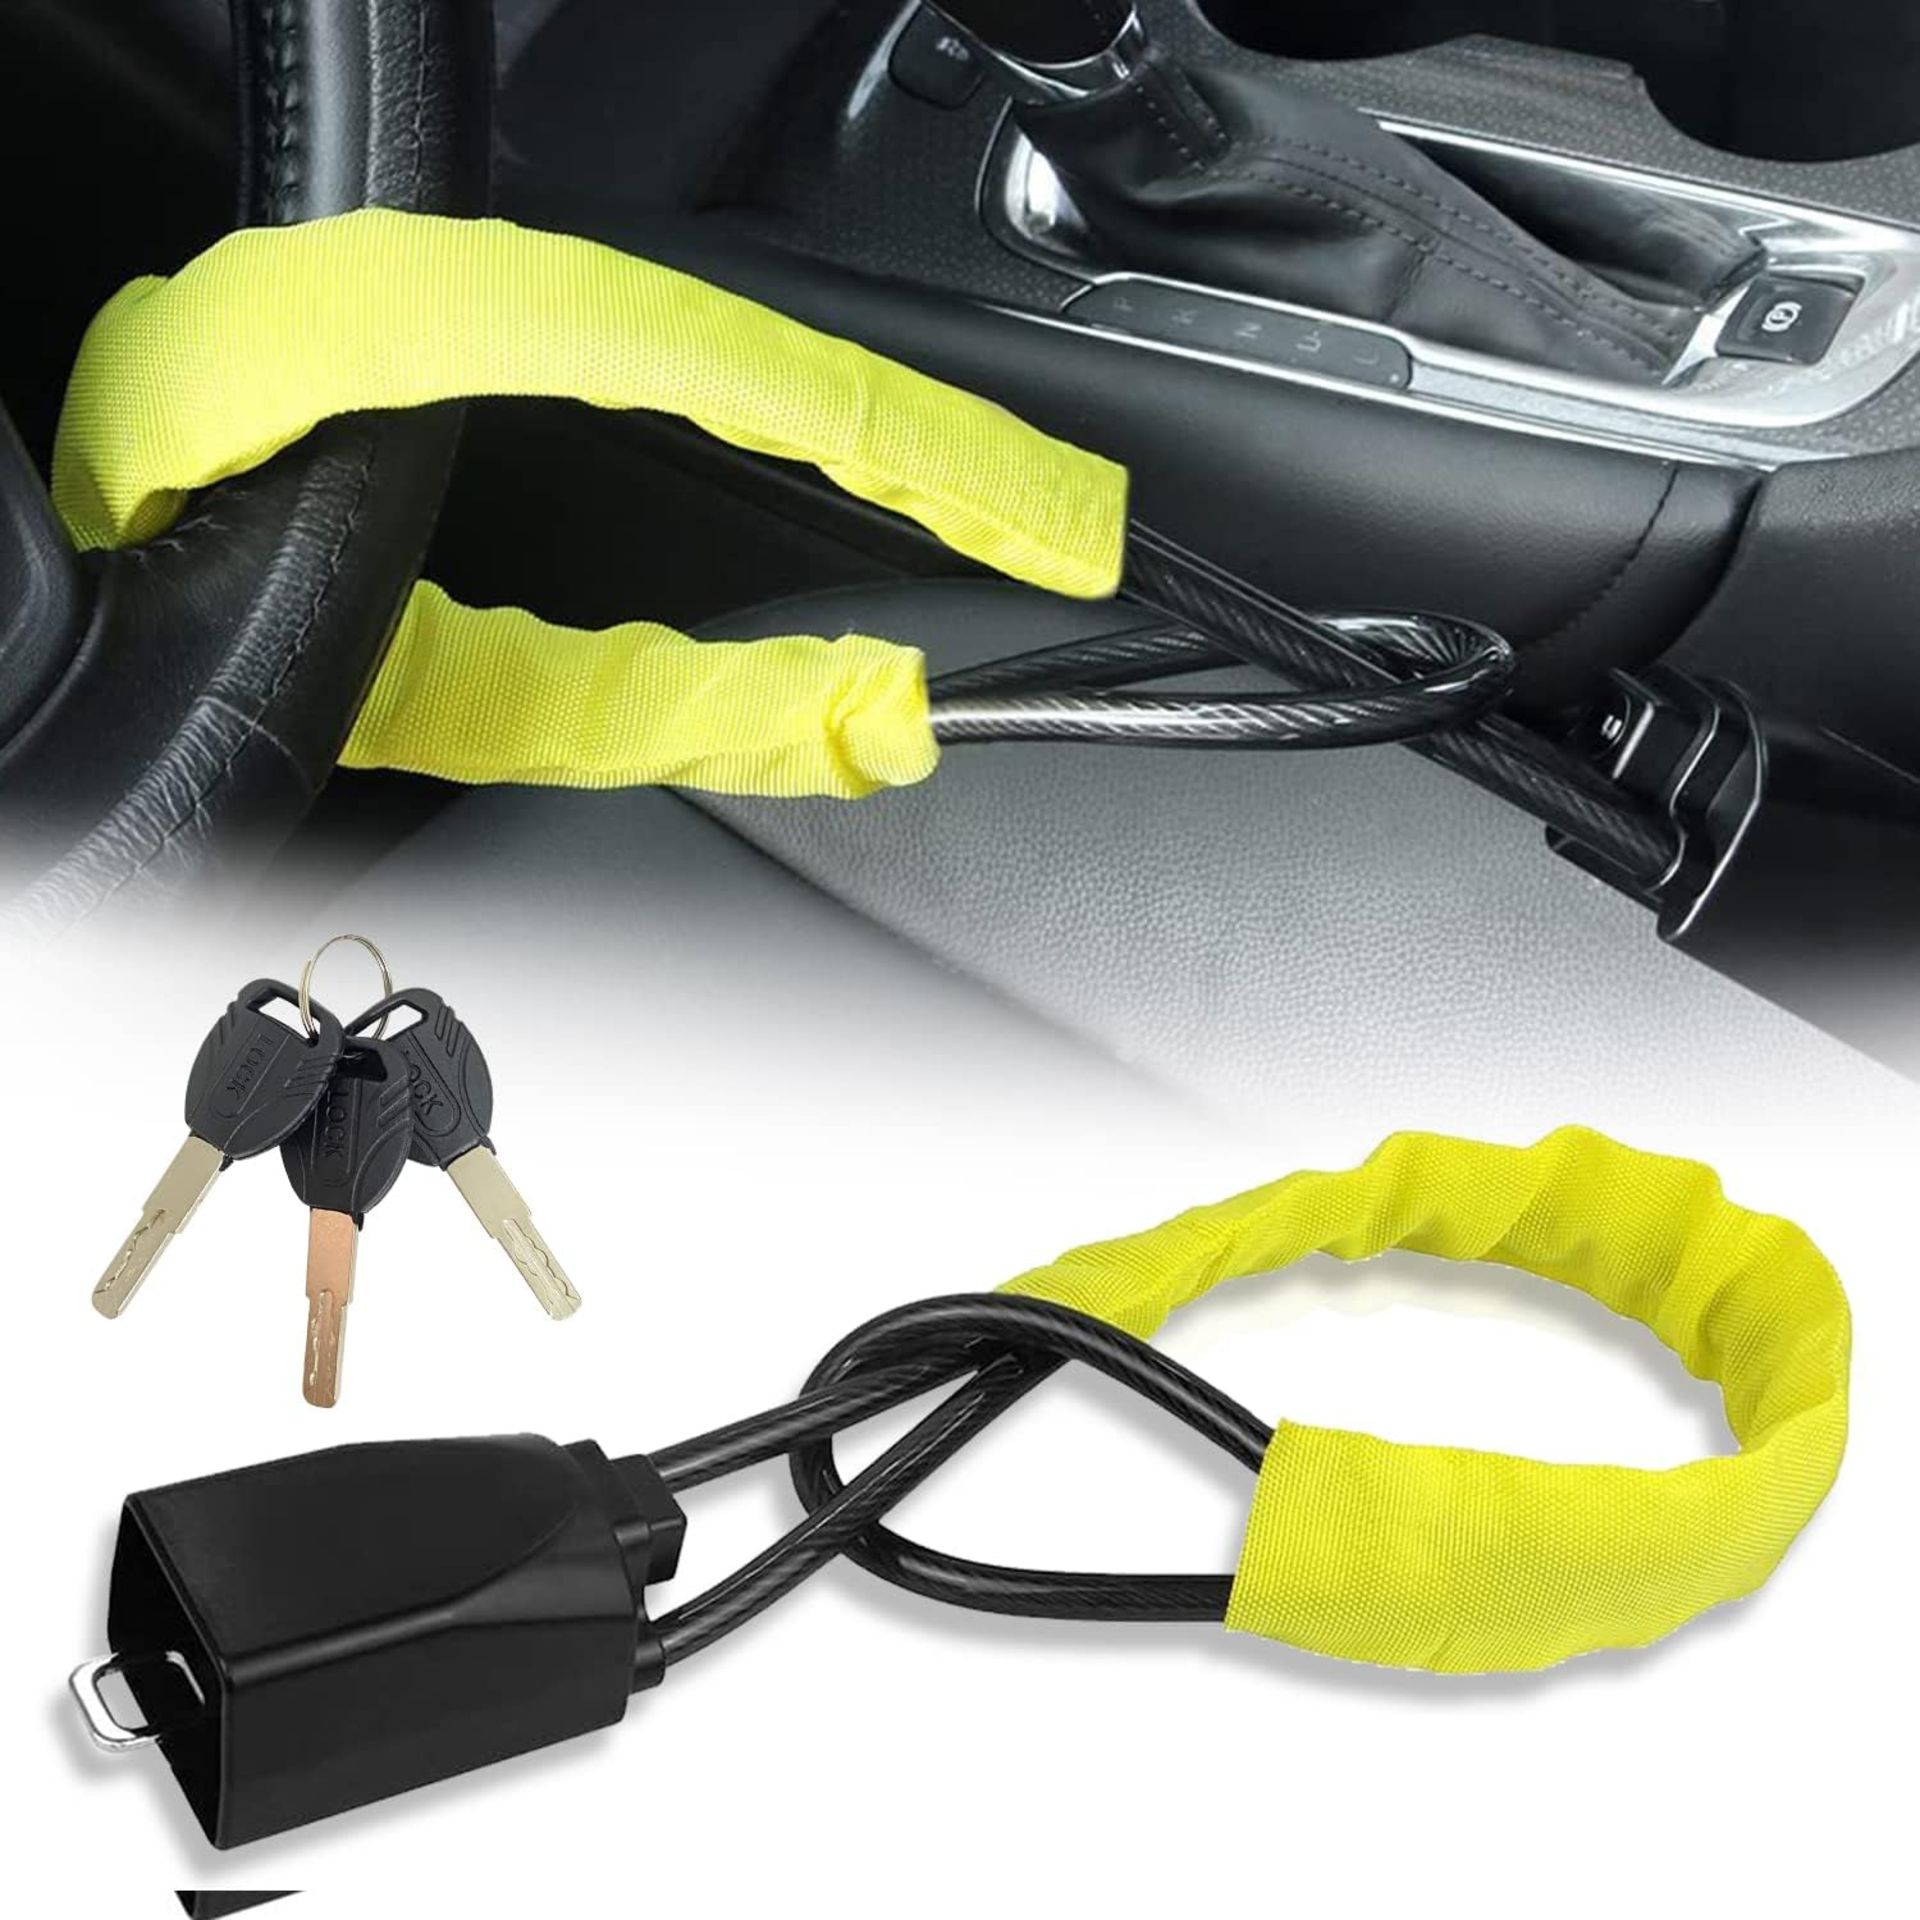 Car Steering Wheel Lock, Anti Theft Device Wheel Lock for SUV Van Car Trucks with 3 Keys